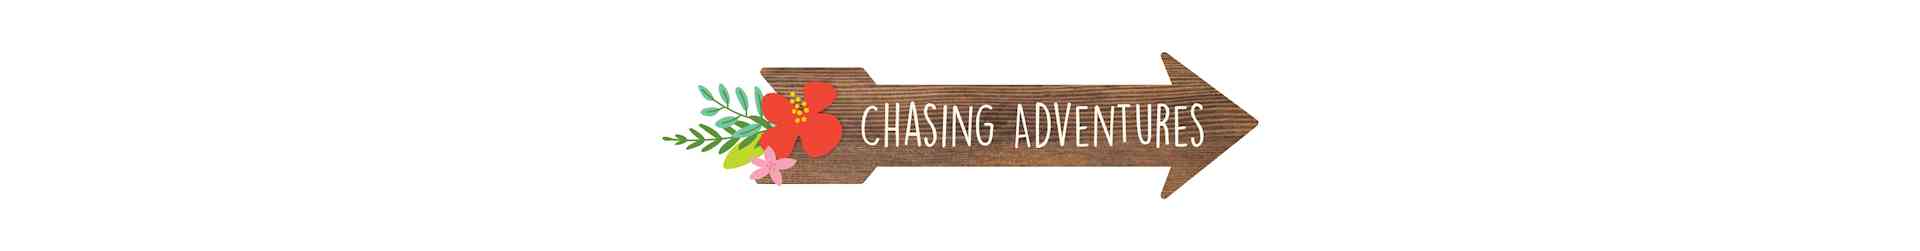 CHASING ADVENTURES - Jen Hadfield